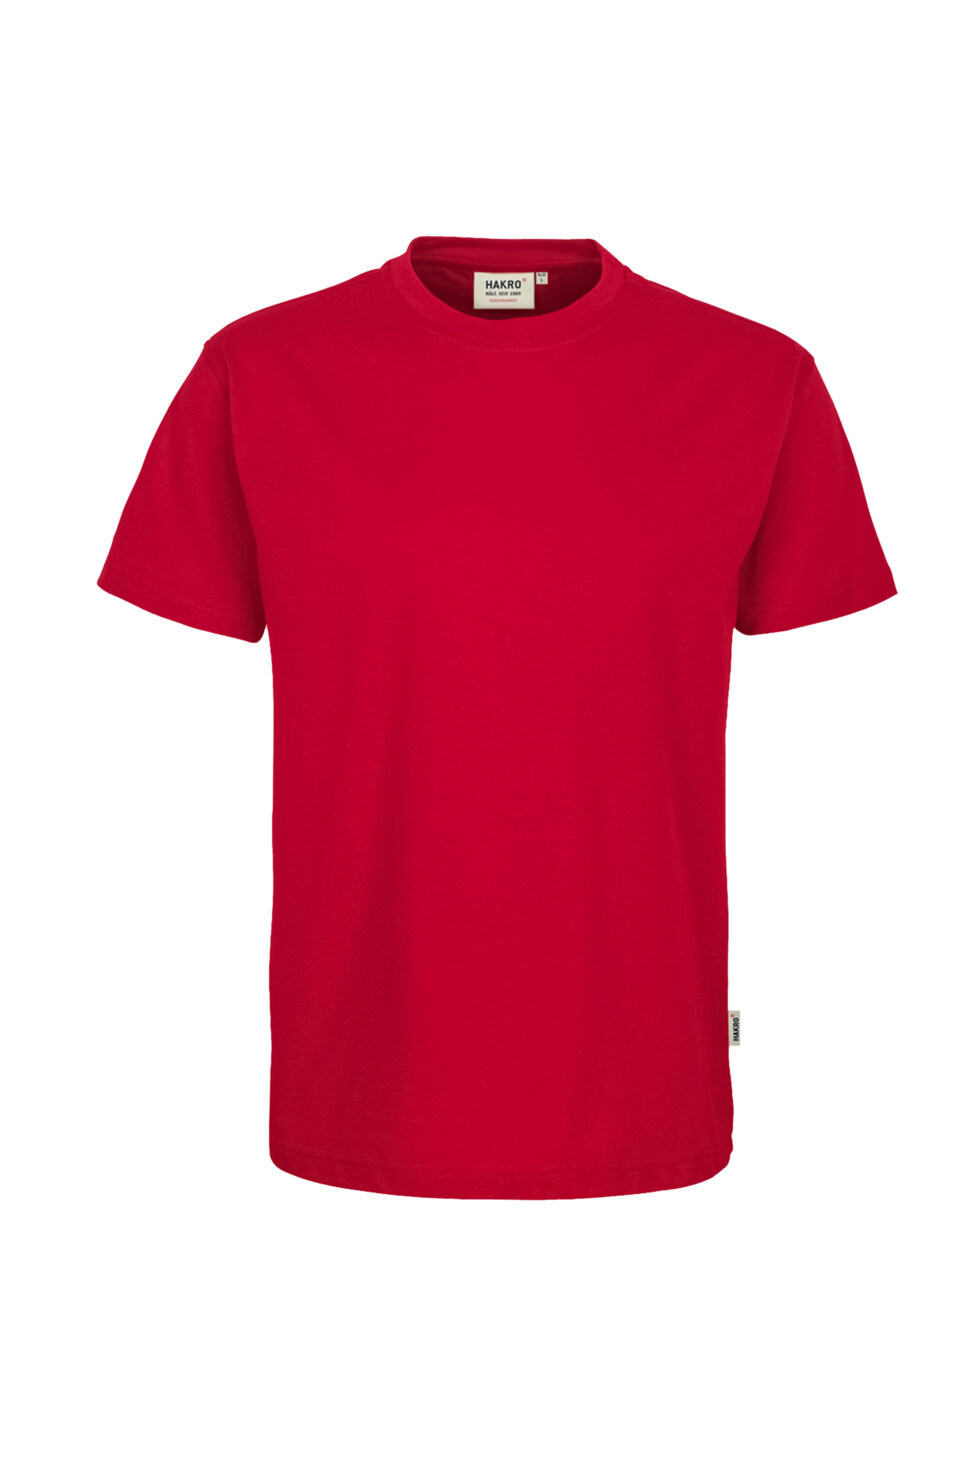 Hakro Herren T-Shirt Performance, Rot